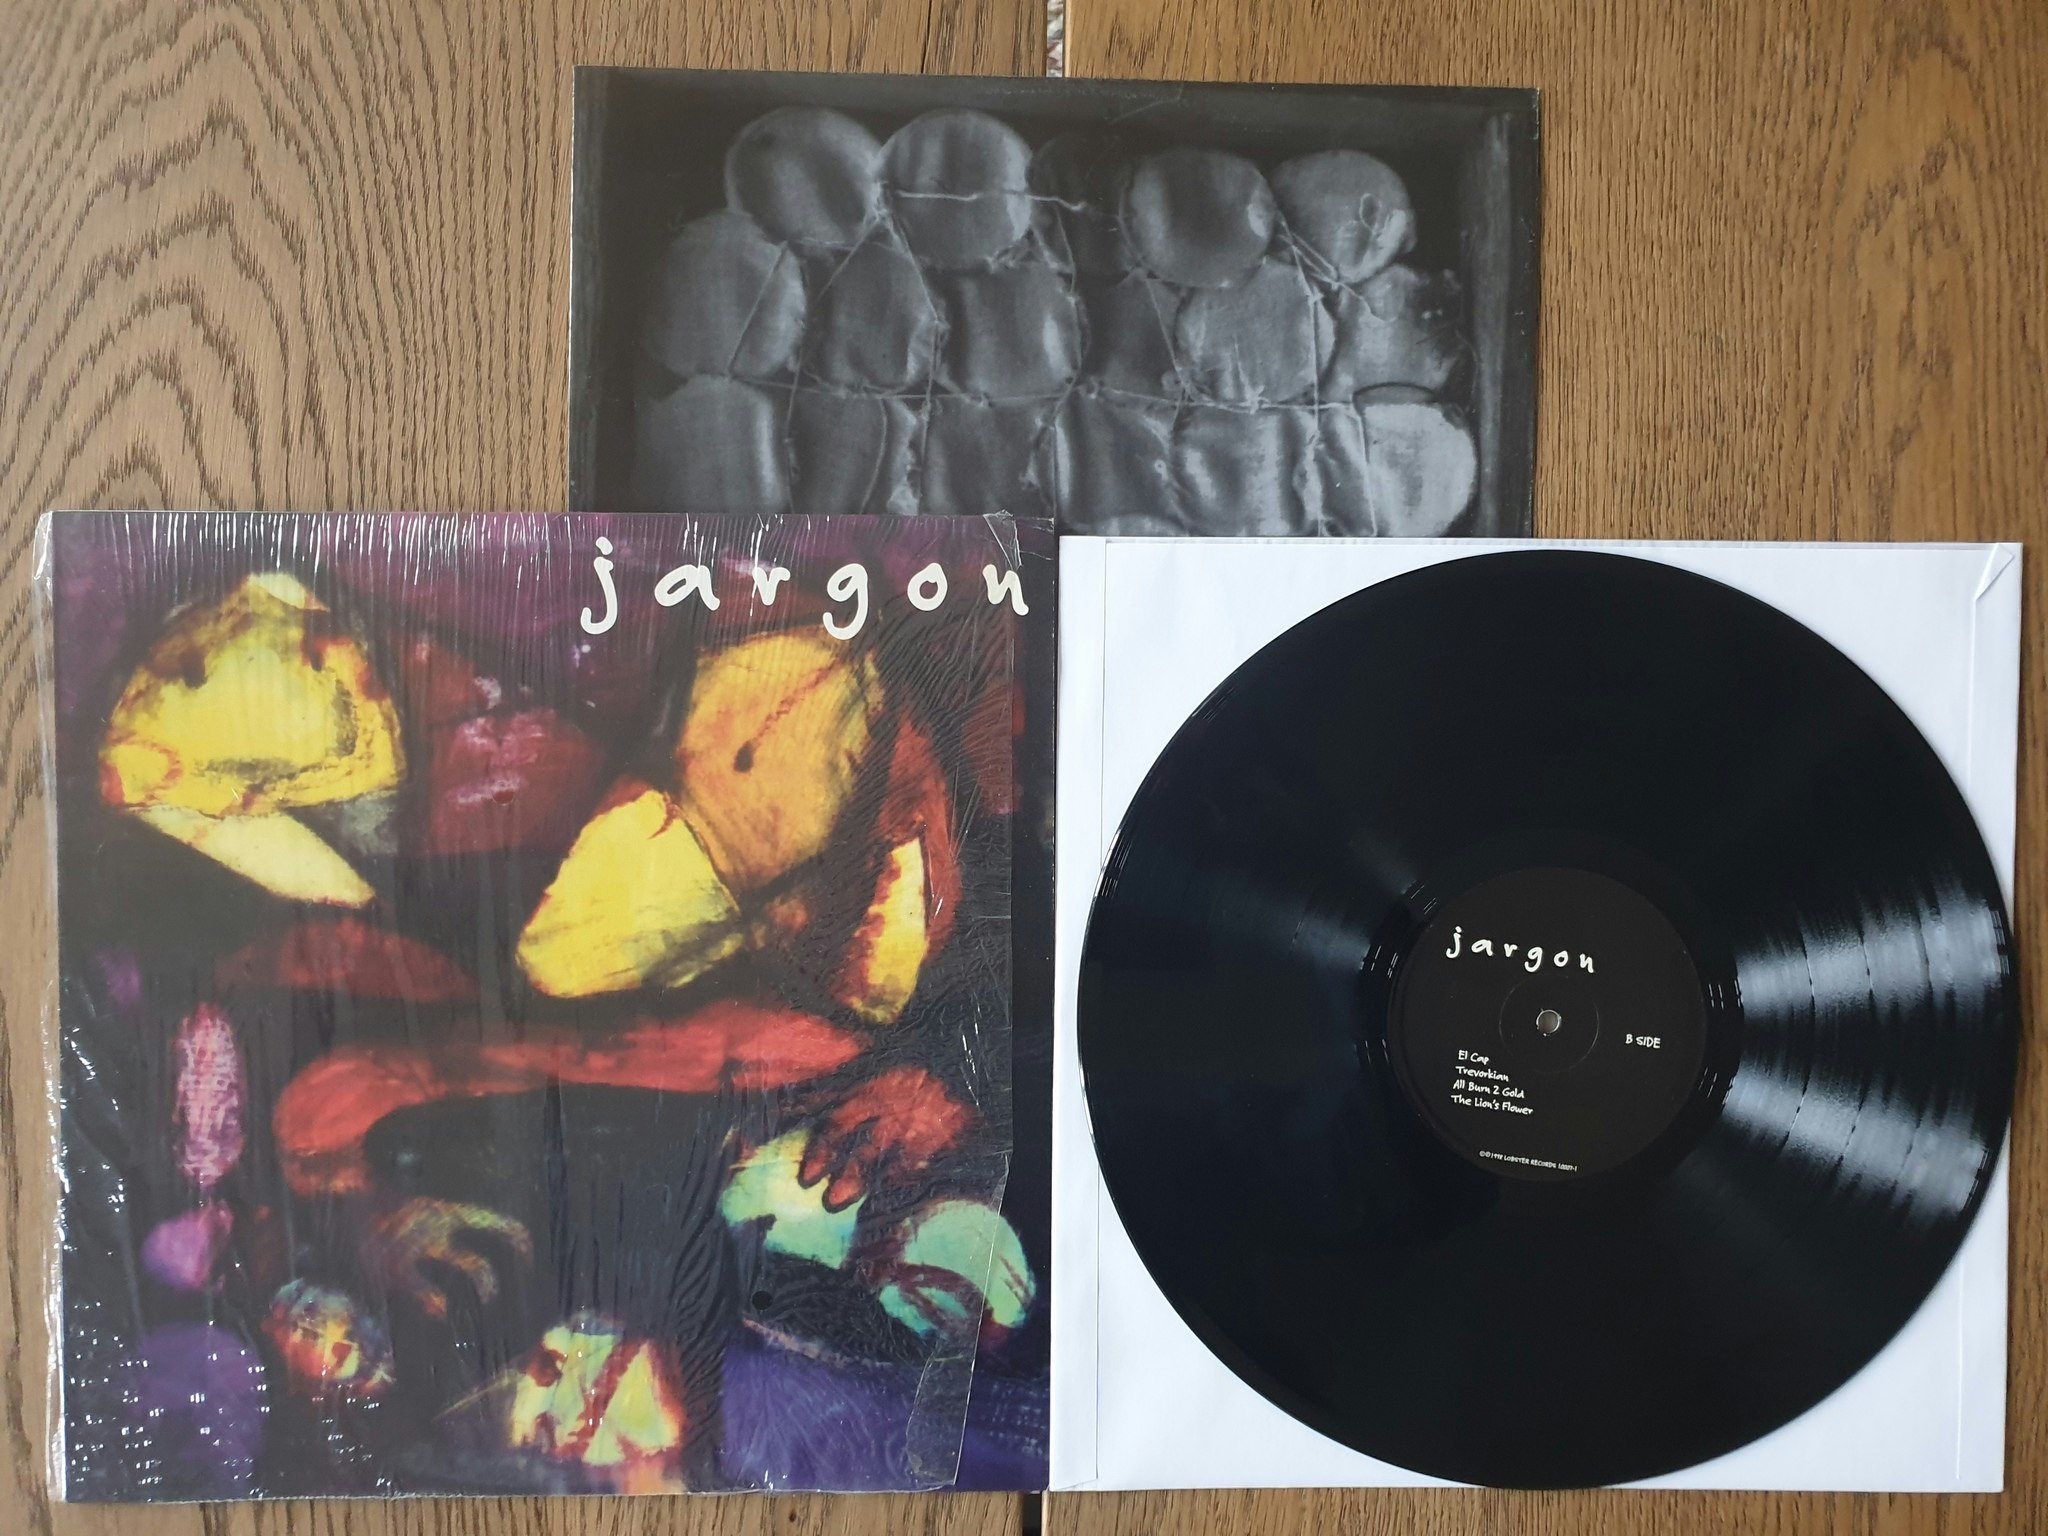 Jargon, Jargon. Vinyl LP